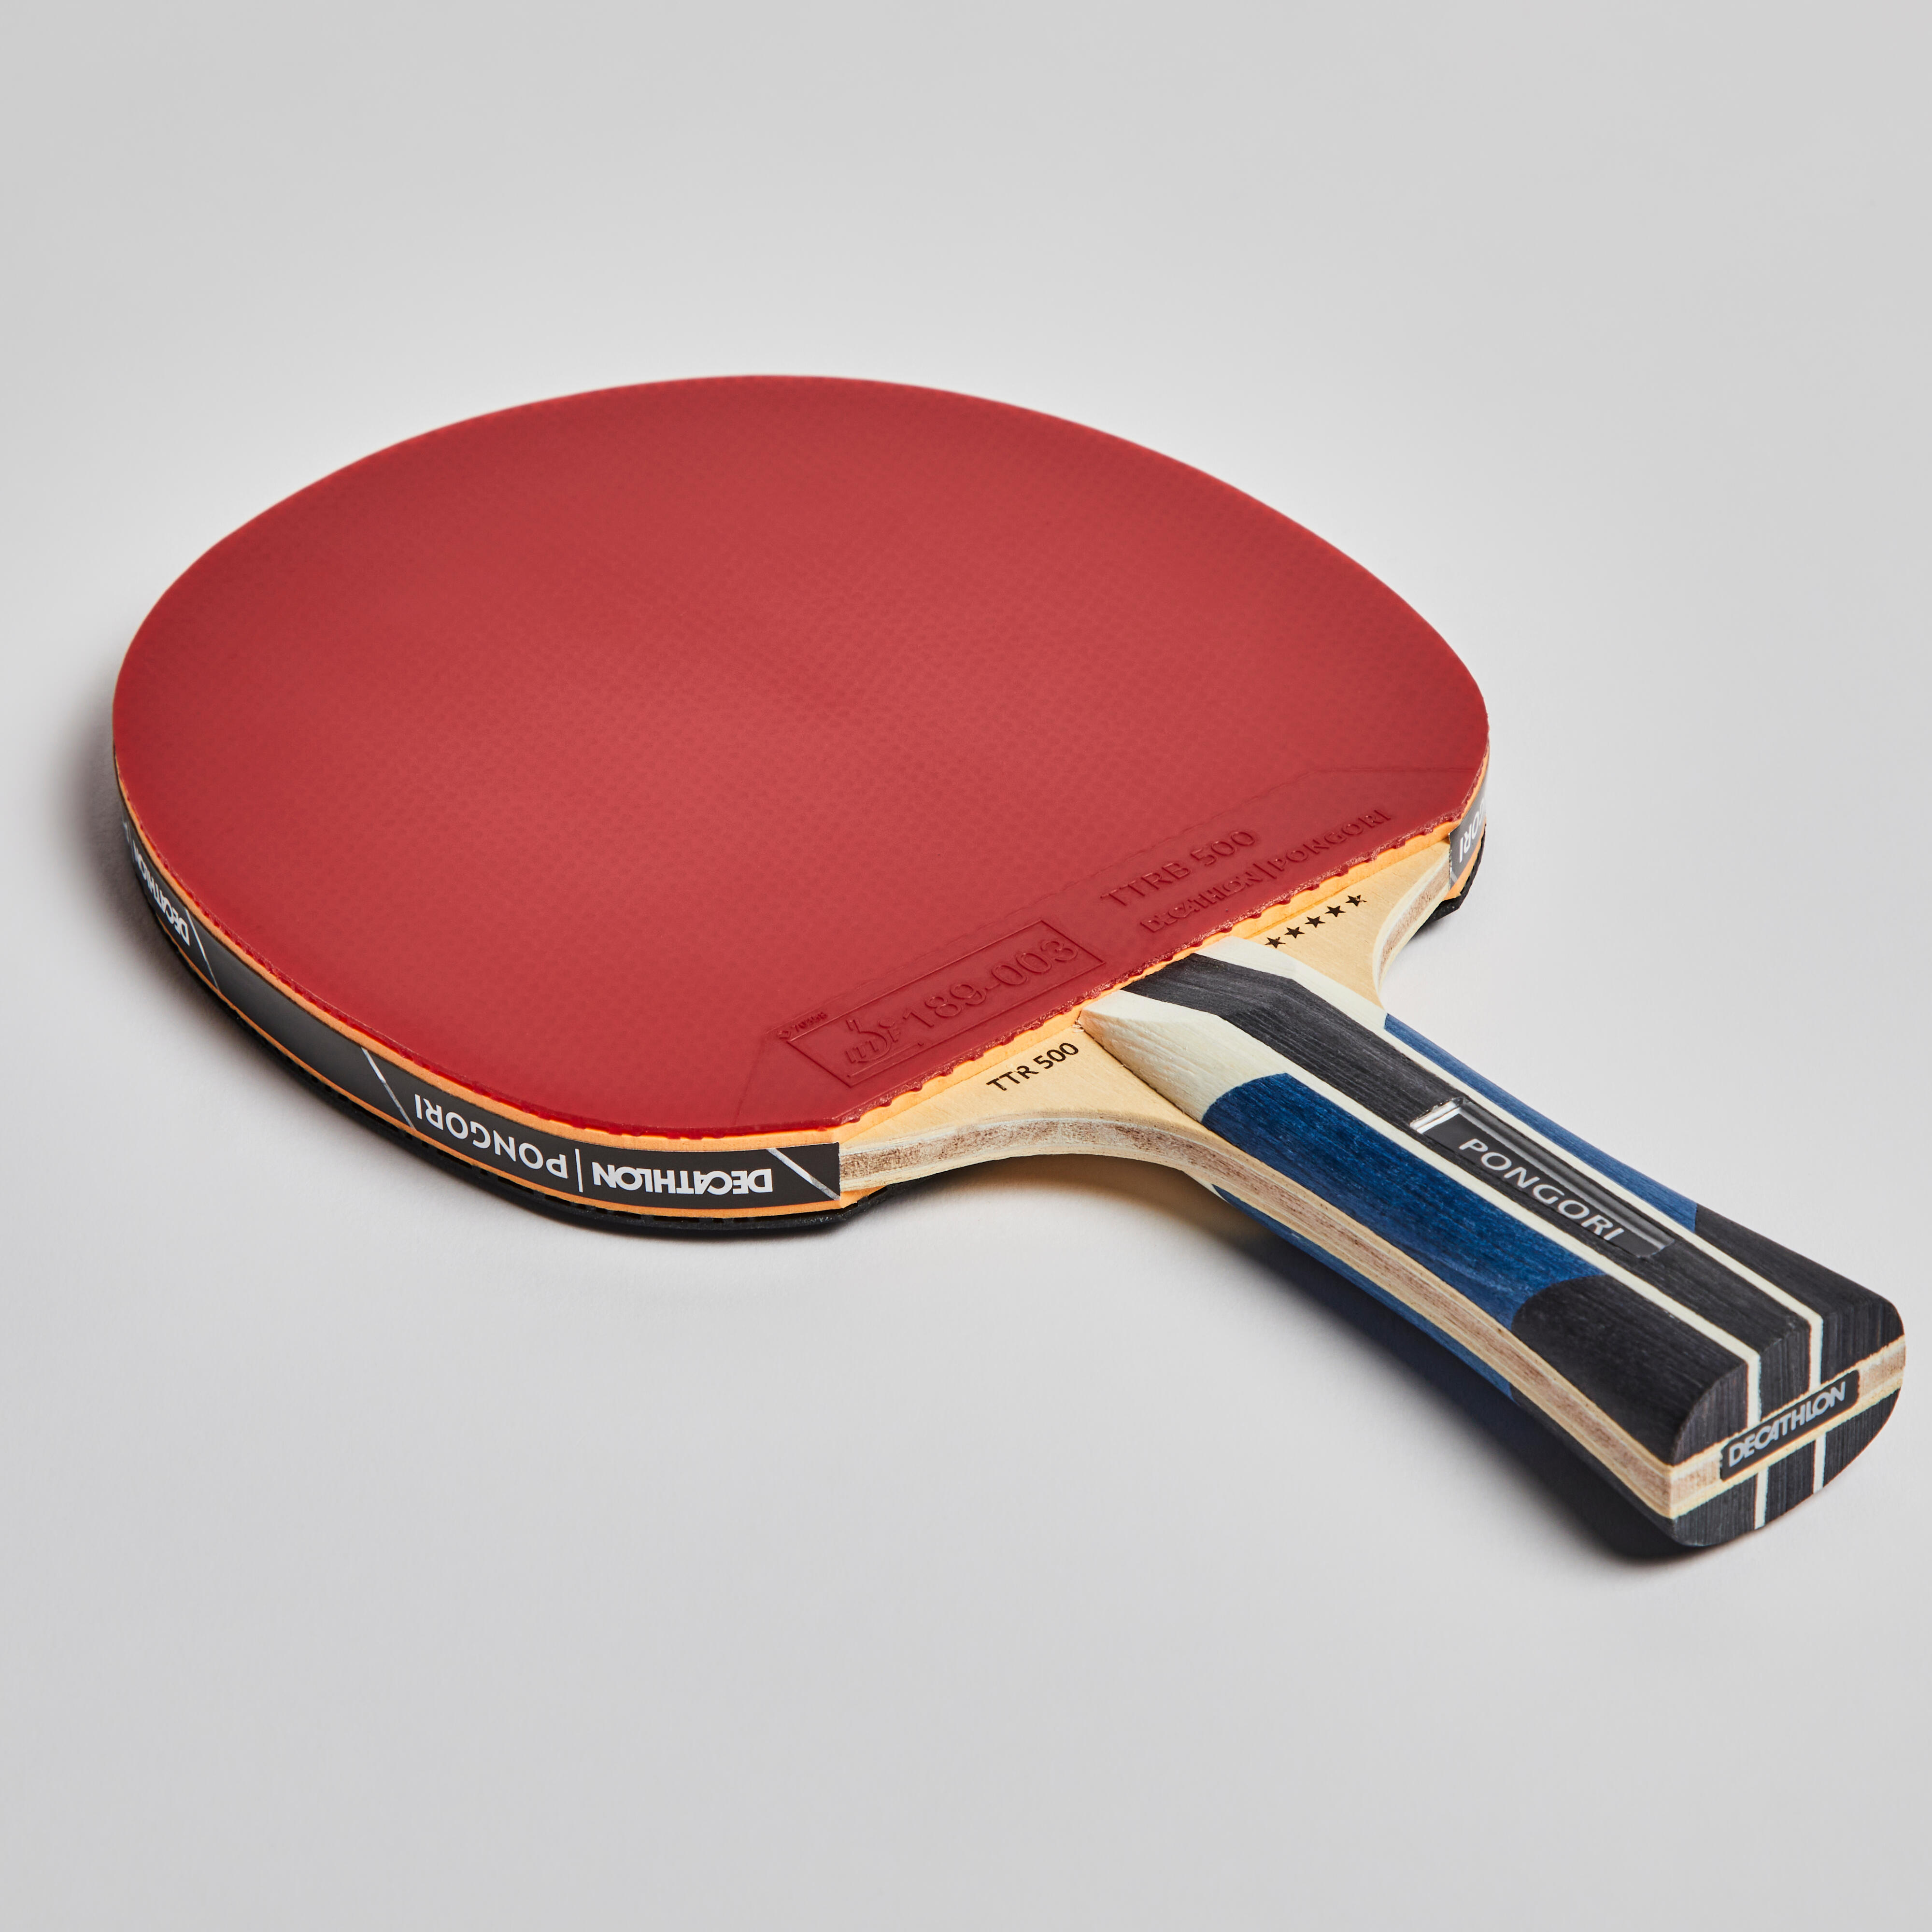 TTR 500 5* Allround Club Table Tennis Paddle - PONGORI